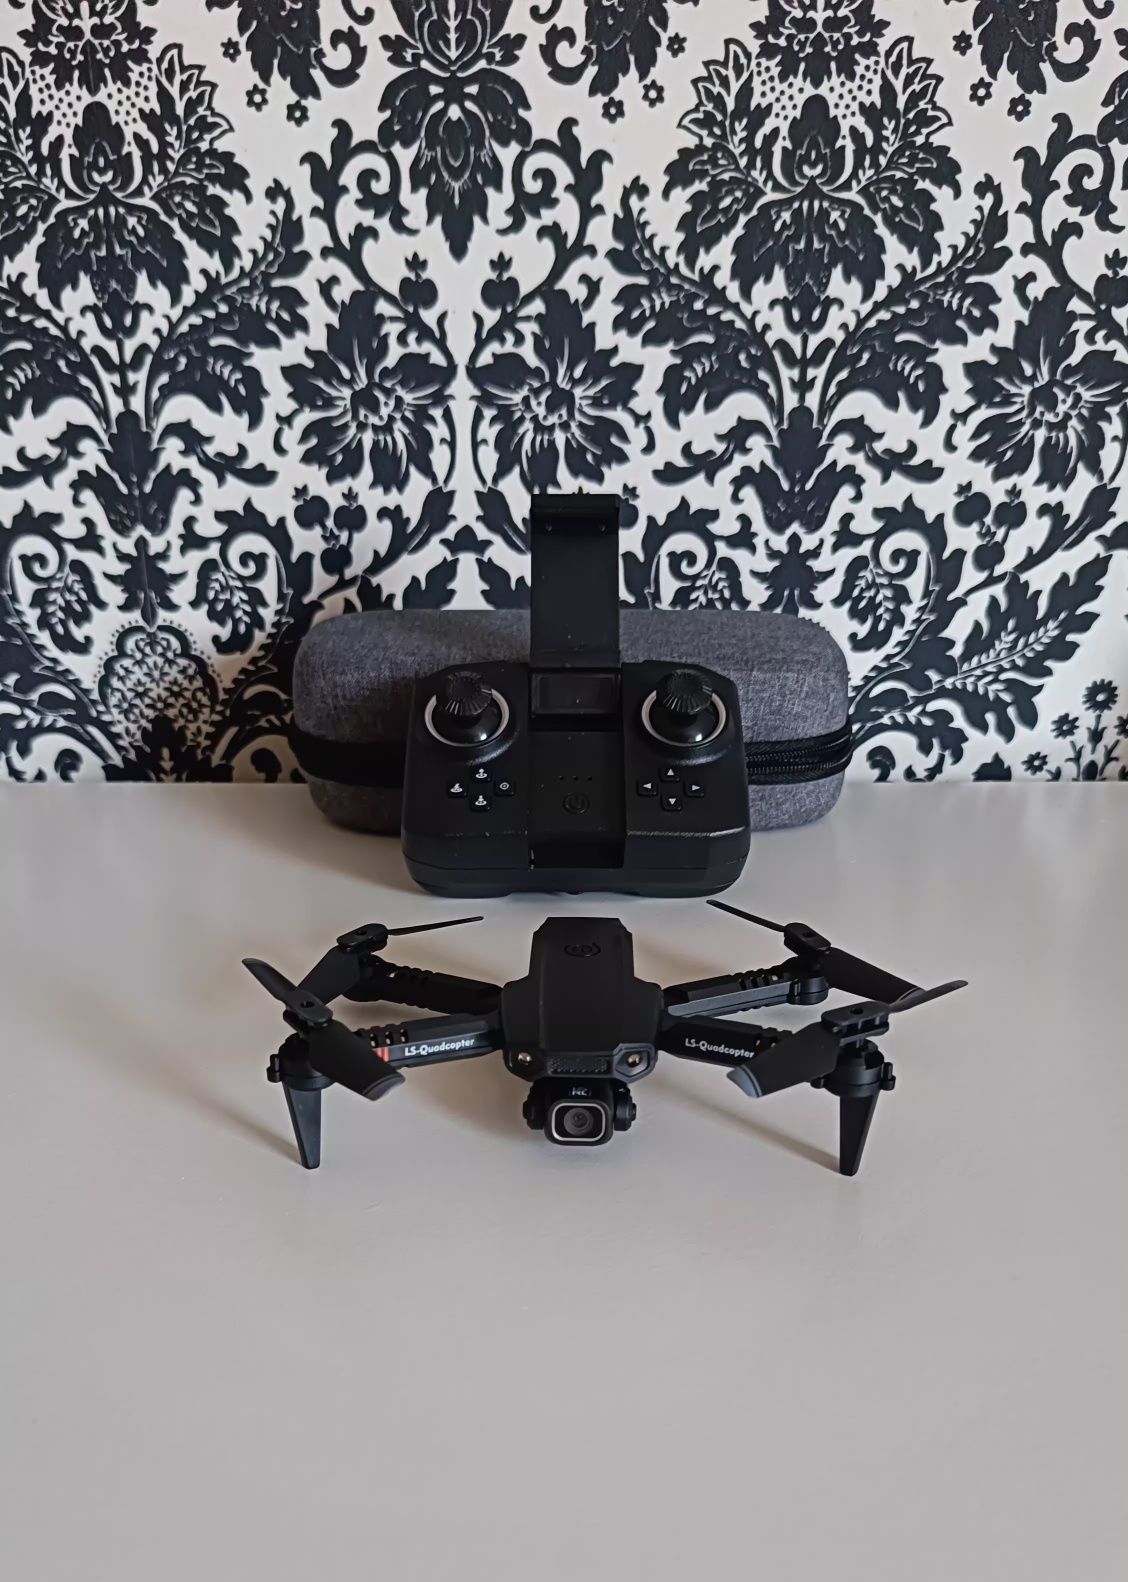 Dron Profesionalny Lasenix Dual Camera OKAZJA !!!